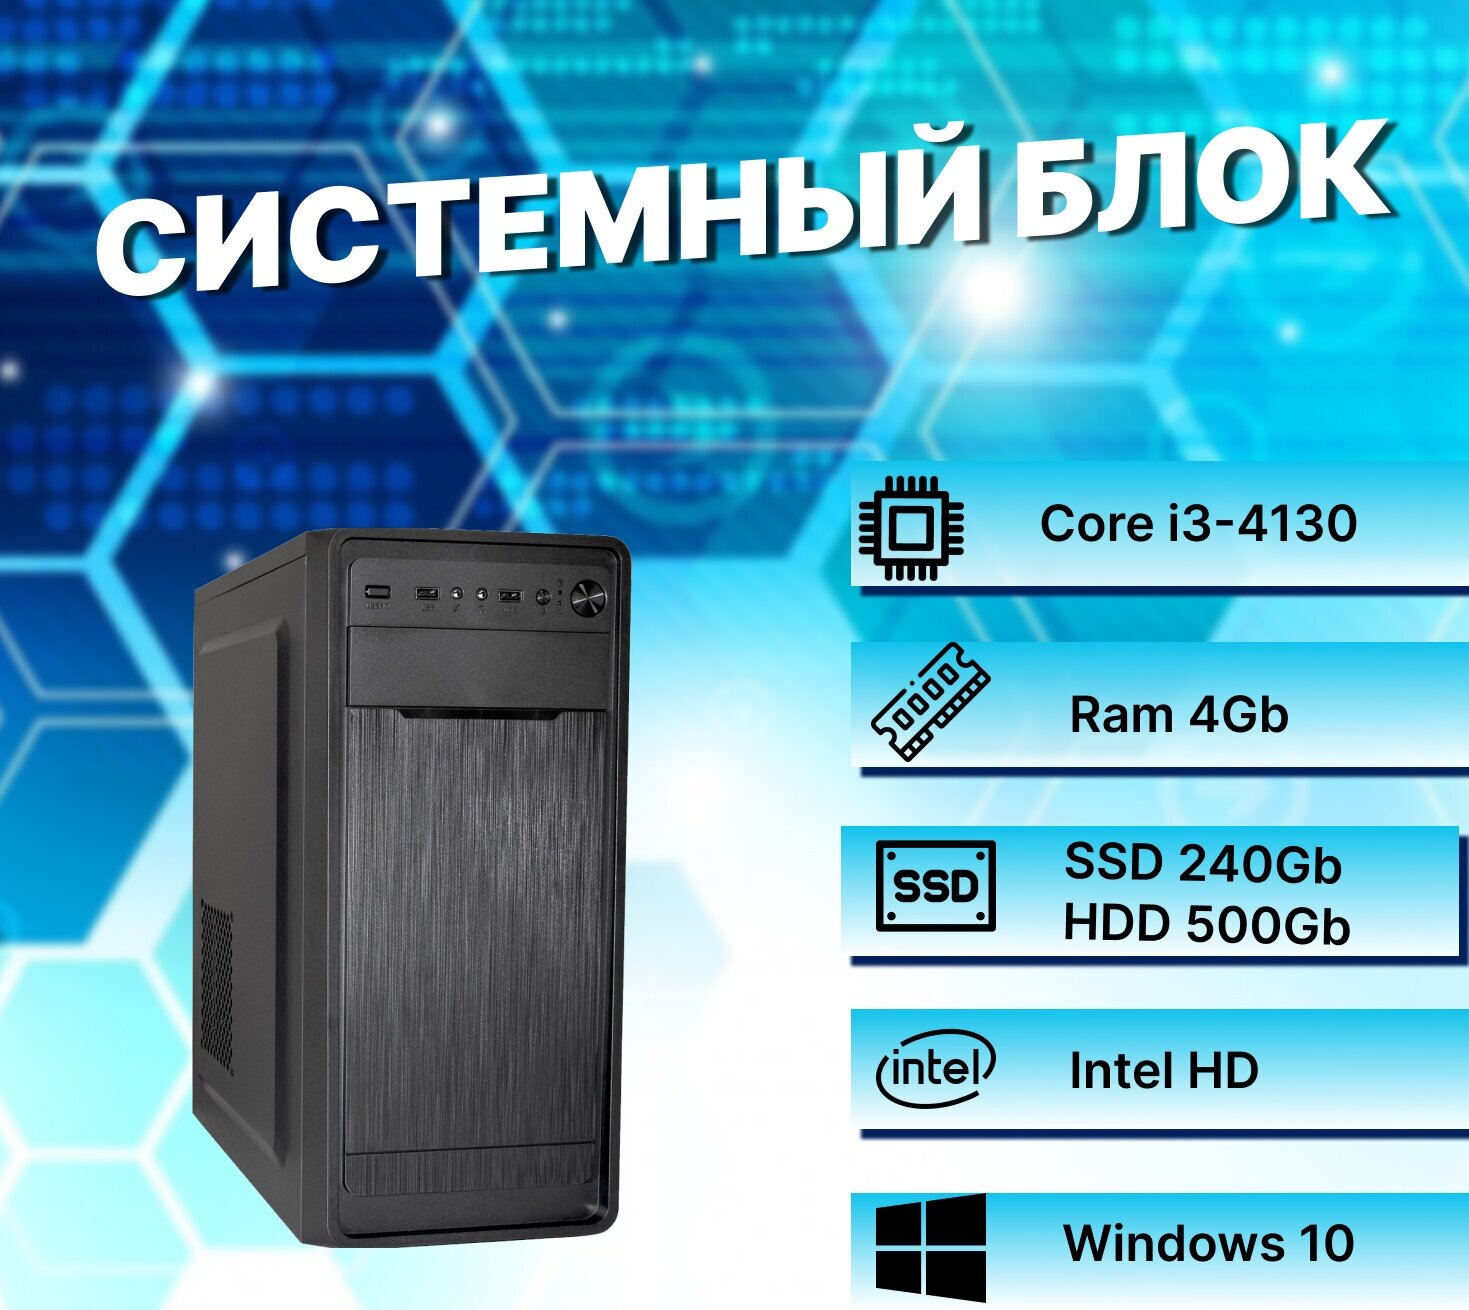 Системный блок Intel Core i3-4130 (3.4ГГц)/ RAM 4Gb/ SSD 240Gb/ HDD 500Gb/ Intel HD/ Windows 10 Pro